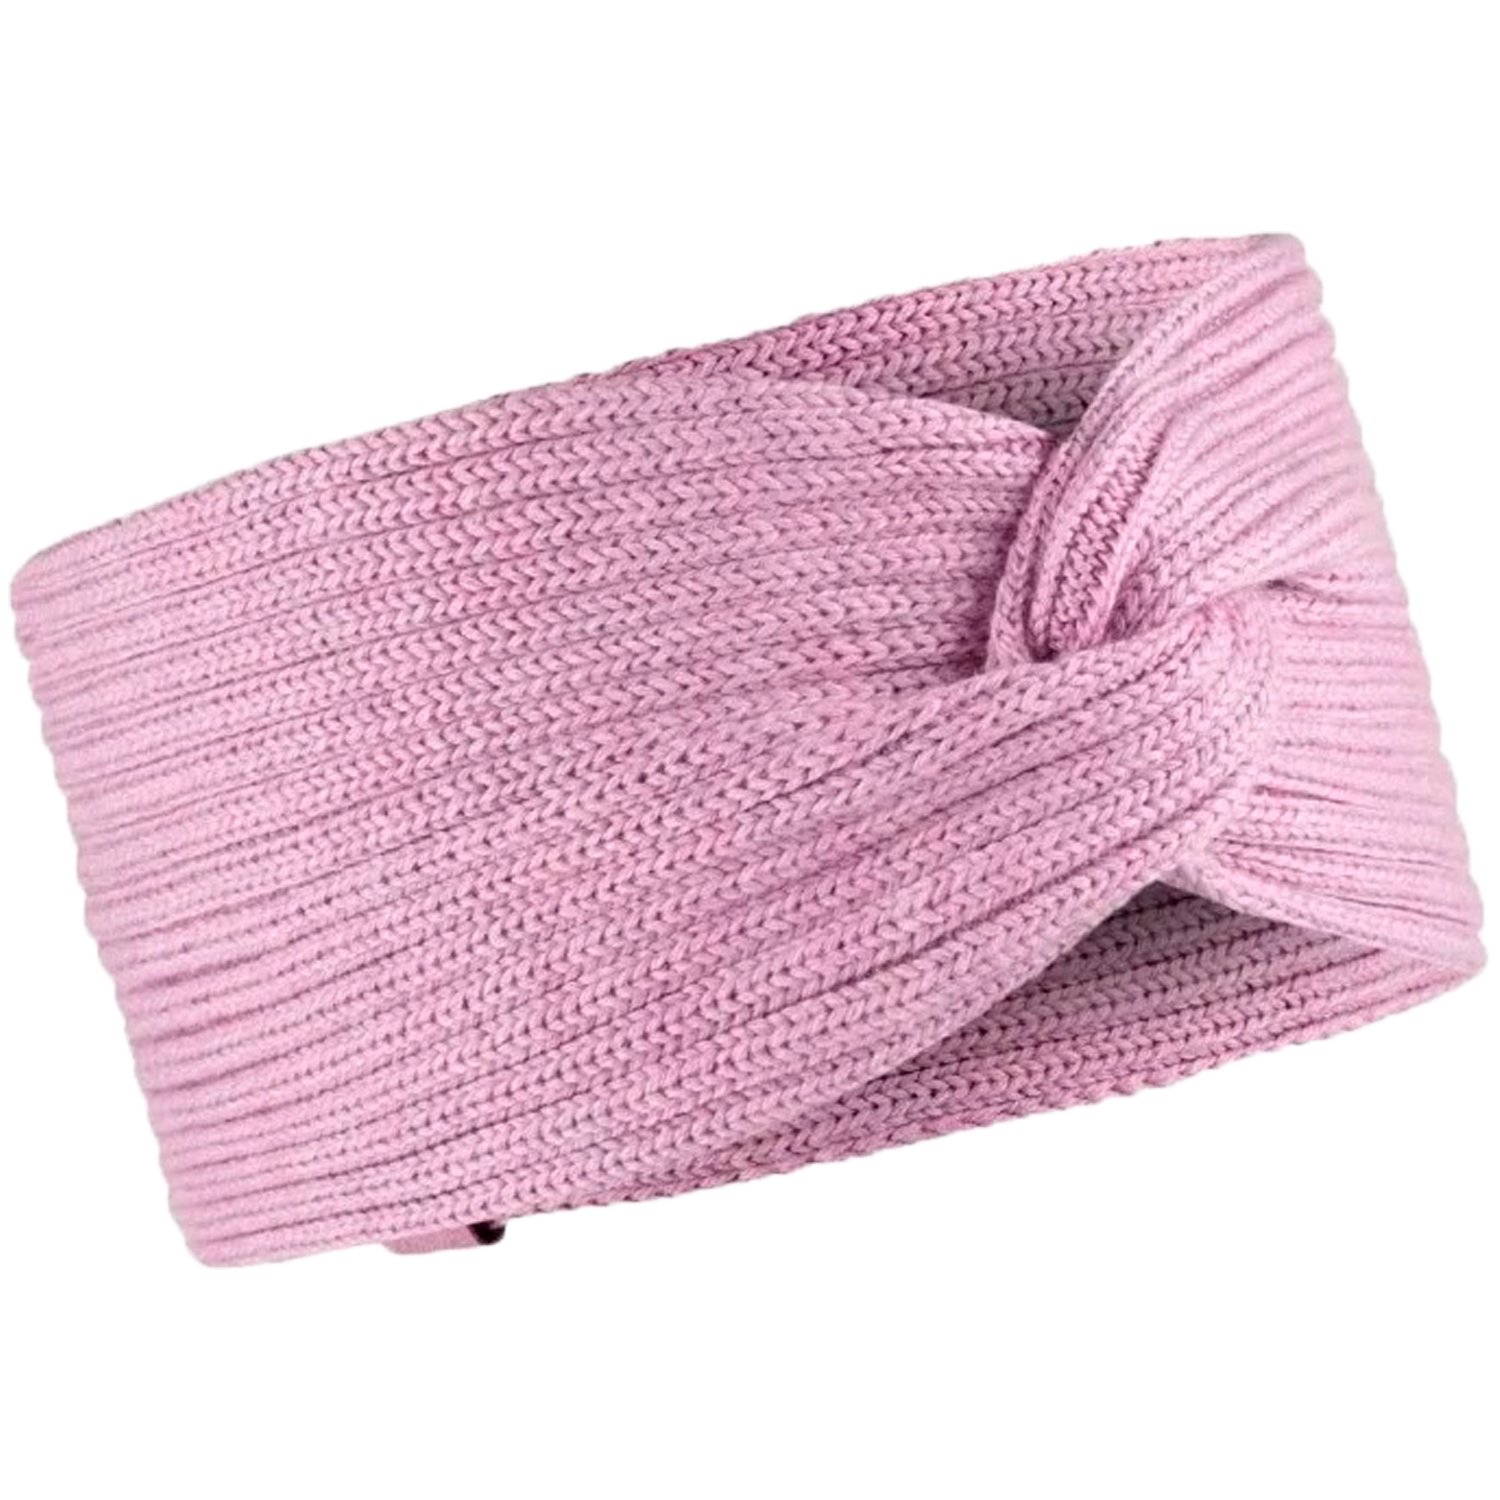 Повязка Buff Knitted Headband Norval Pansy, женский, 126459.601.10.00 повязка buff knitted hat norval graphite серый 126459 901 10 00